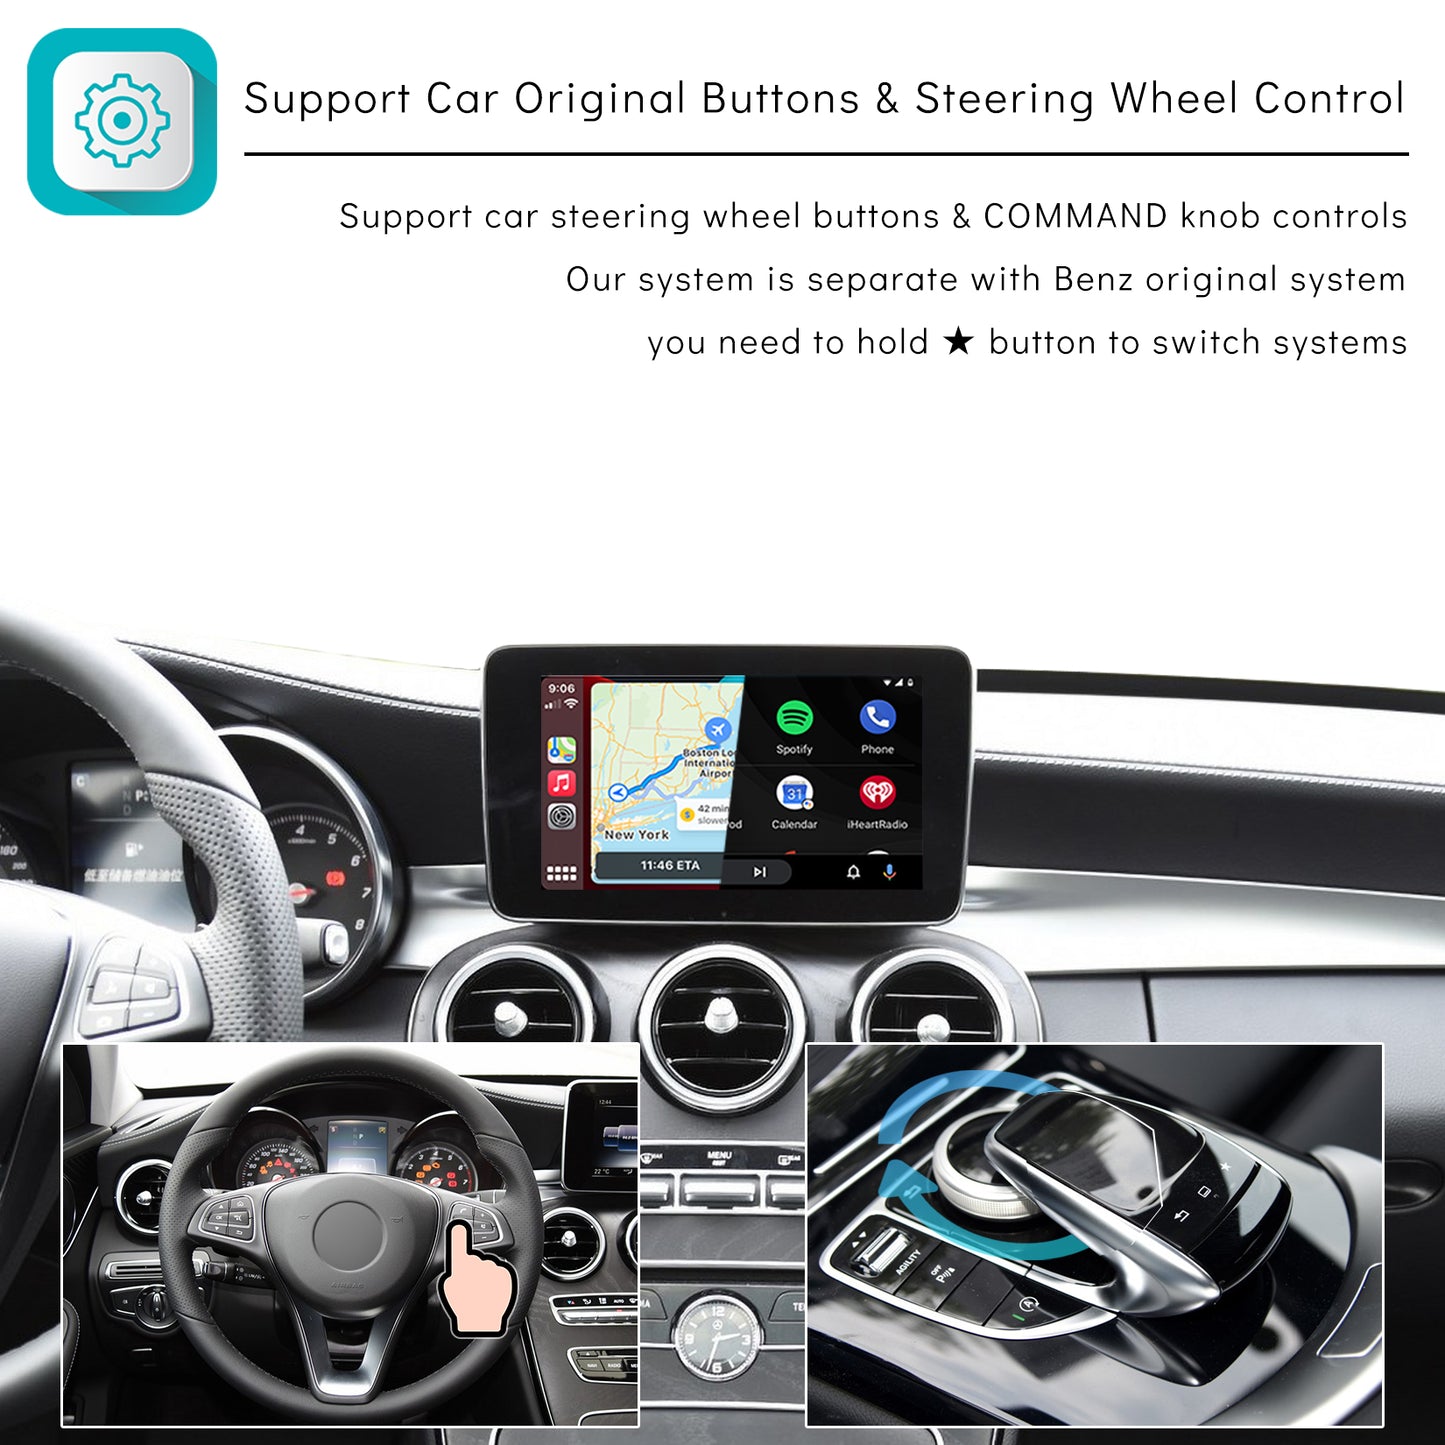 CarProKit for Mercedes-Benz Wireless CarPlay Android Auto Retrofit Kit Support Benz A/B/C/E/S CLA GLA GLC GLE GLK ML AMG 2015-2018 NTG 5.0 System